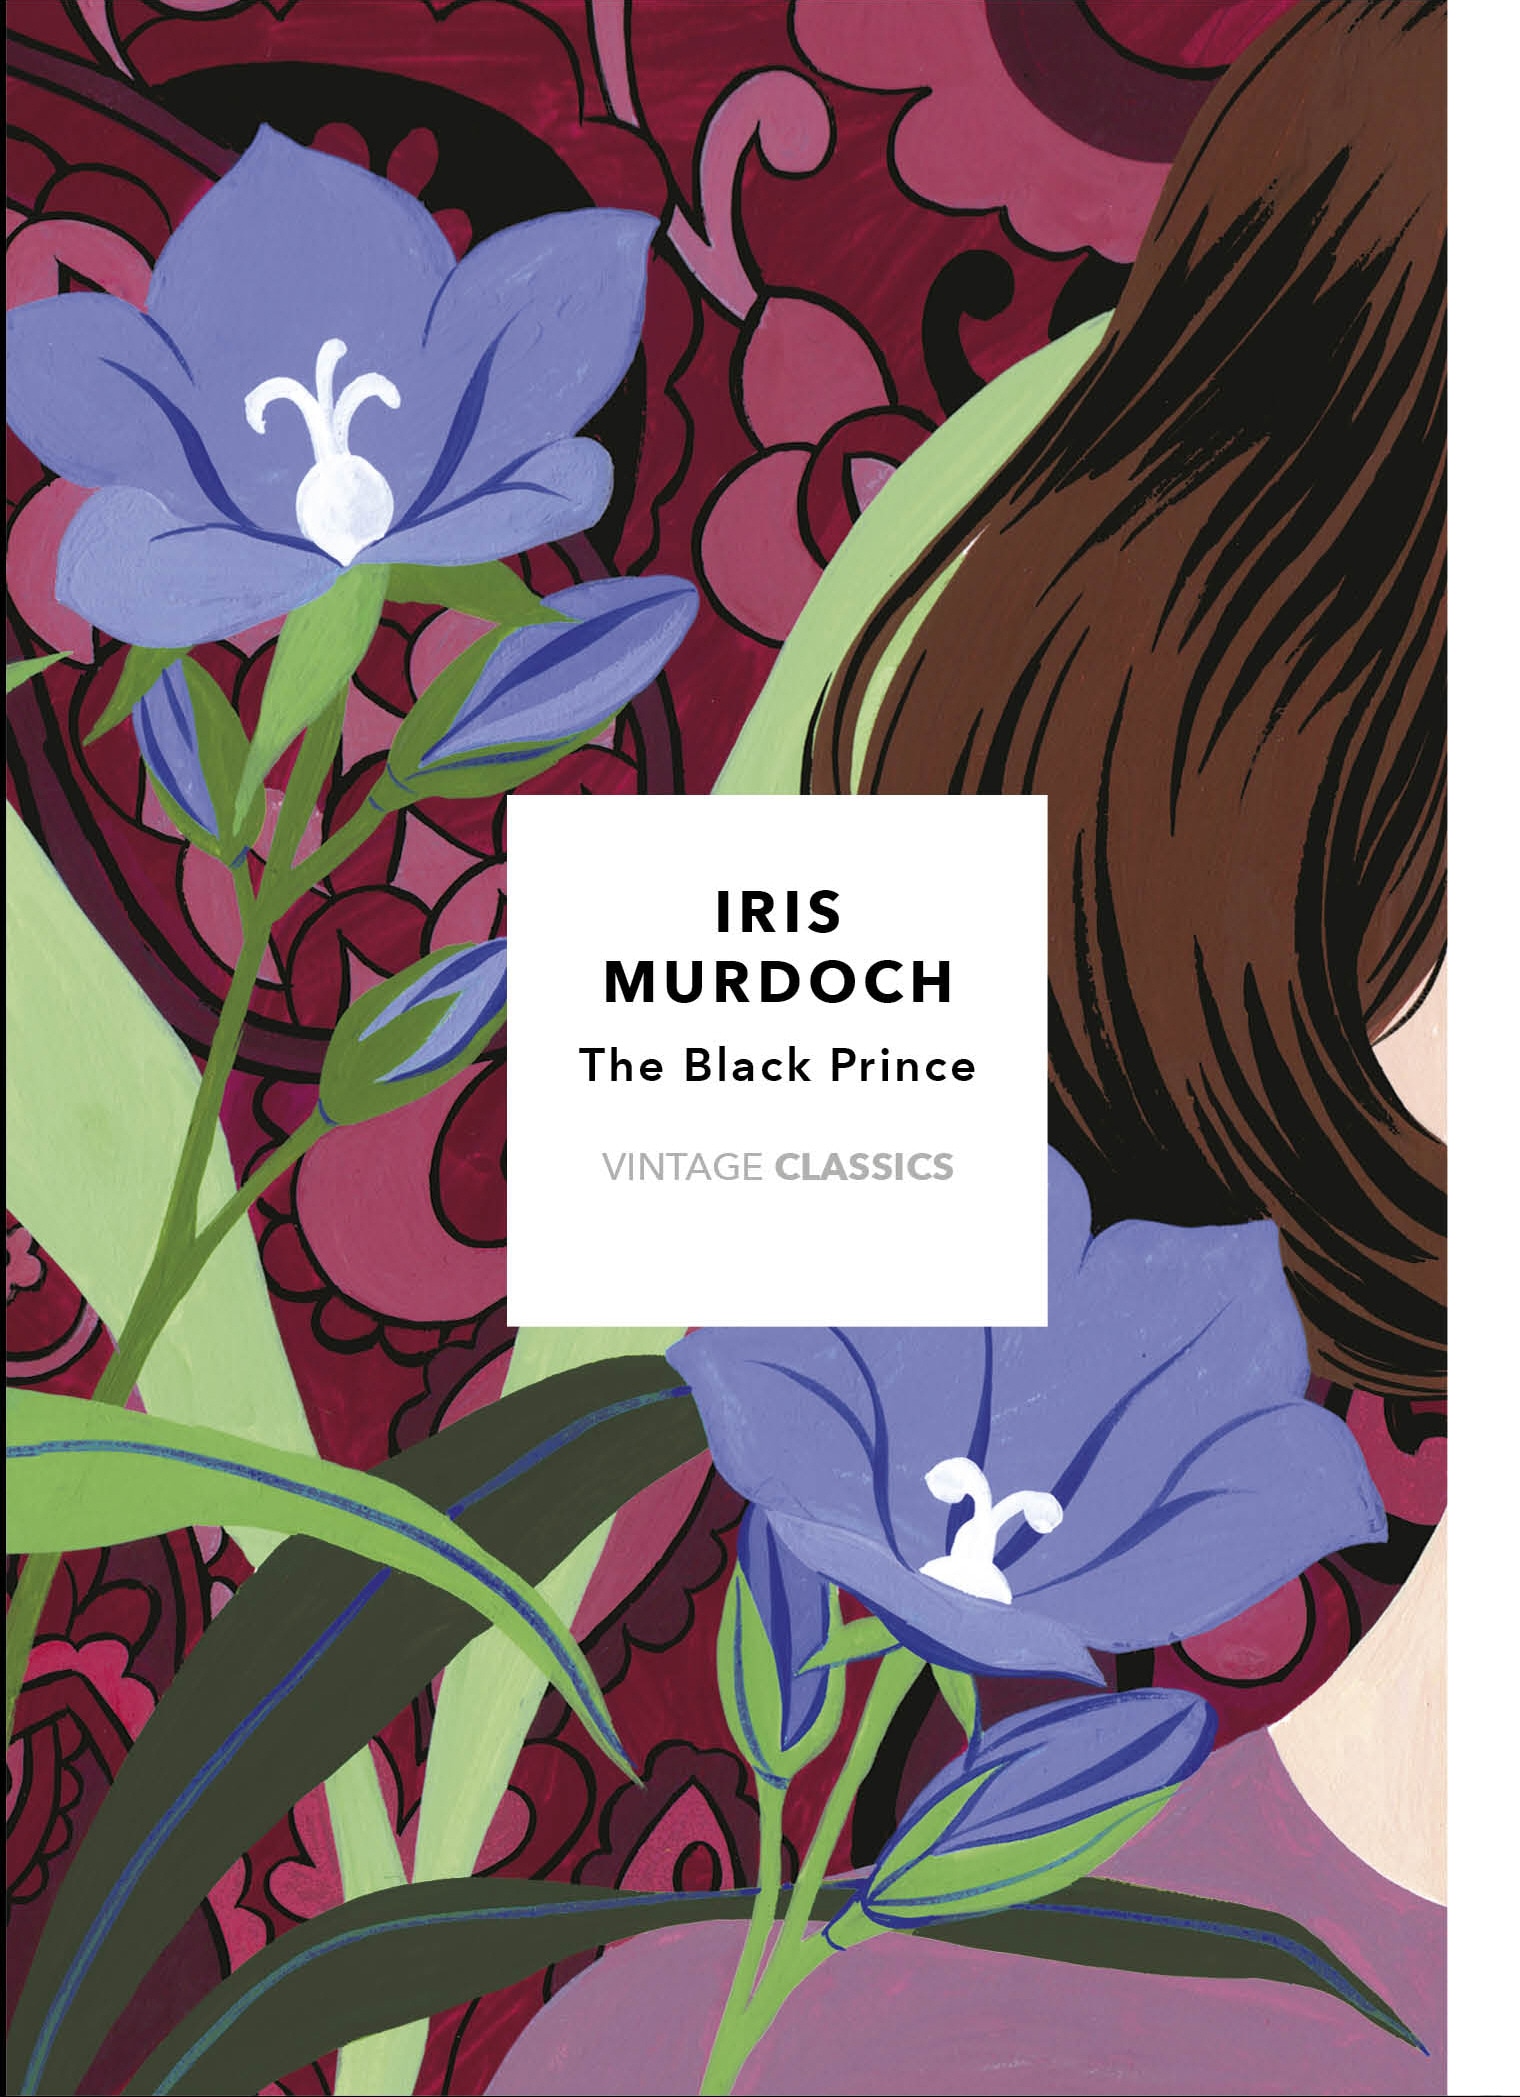 Book “The Black Prince (Vintage Classics Murdoch Series)” by Iris Murdoch, Sophie Hannah — July 4, 2019